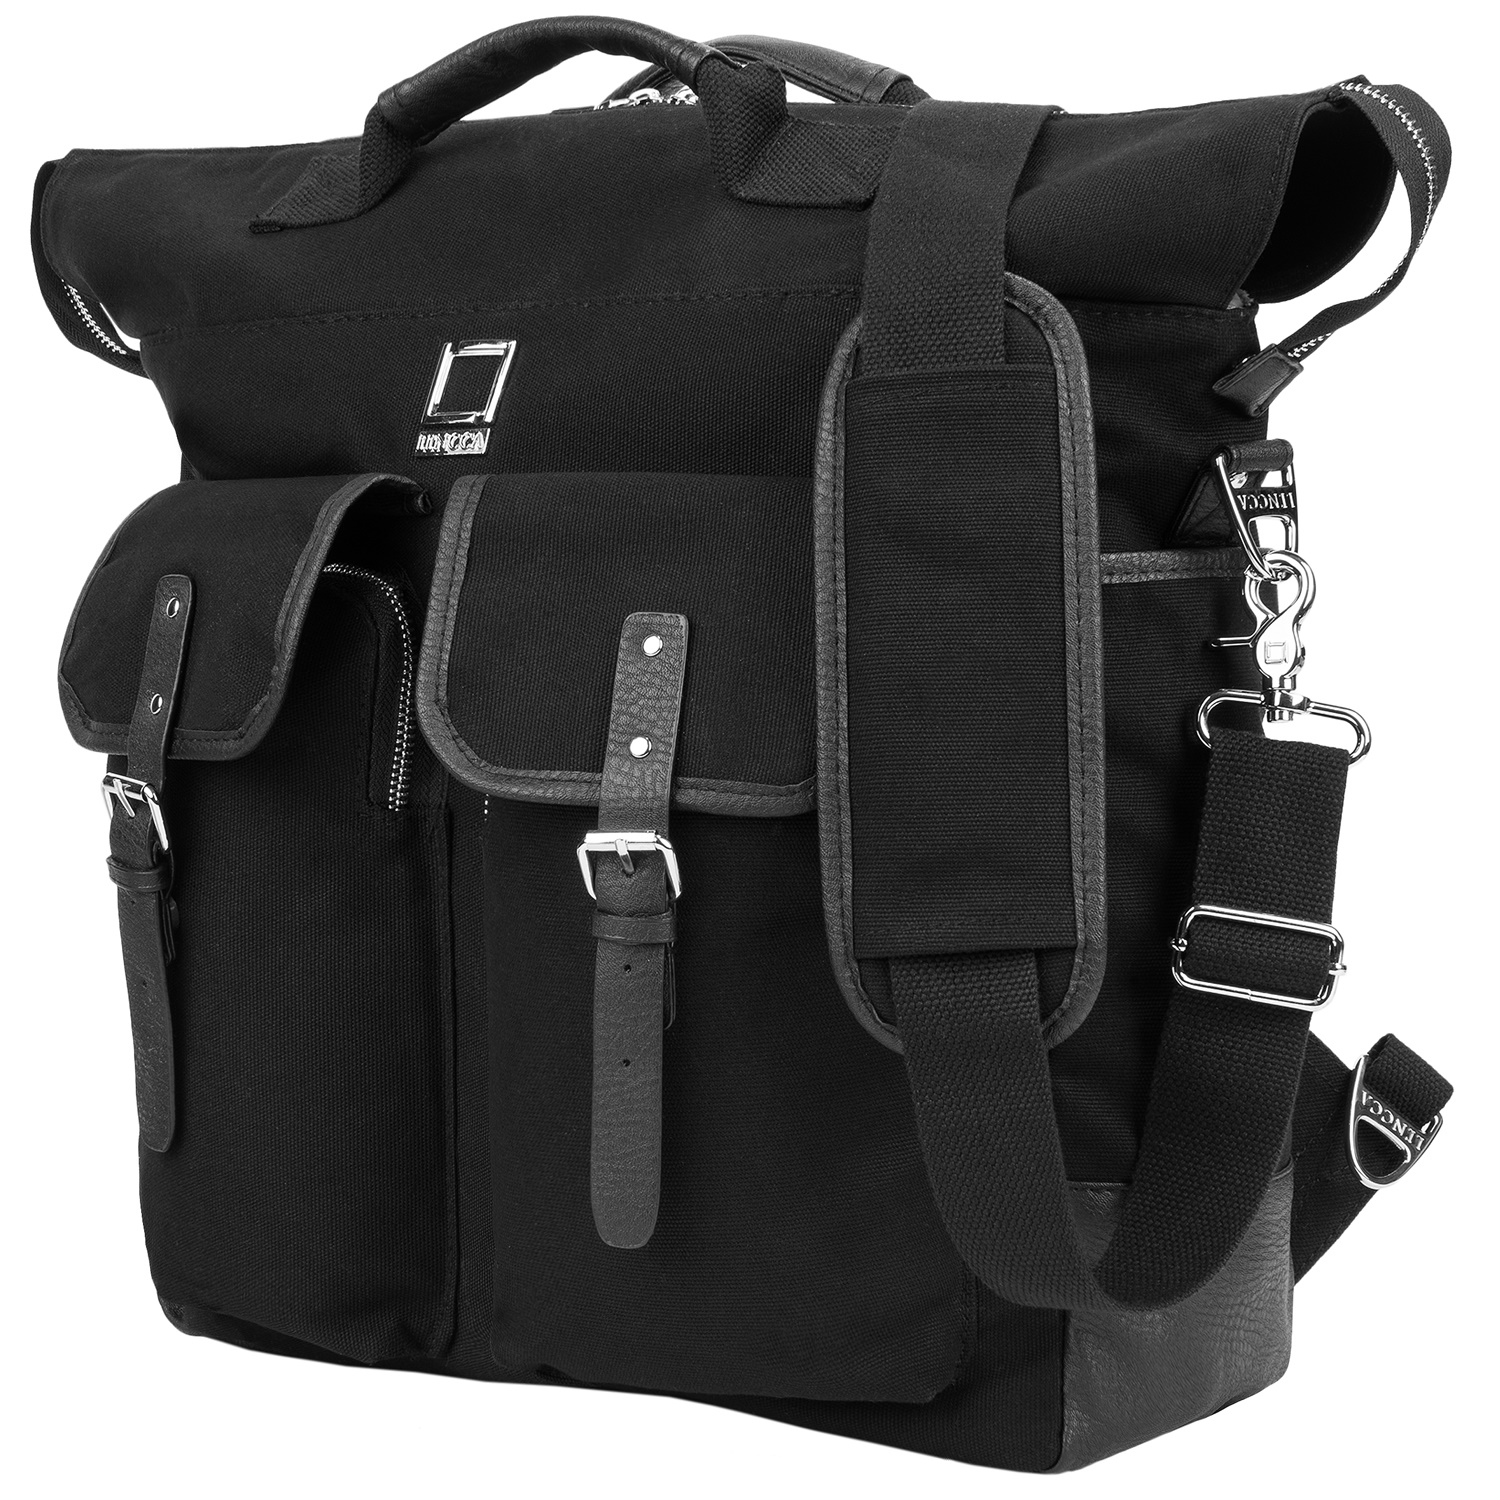 Lencca Phlox Unisex Messenger Laptop / Notebook / Ultrabook Carrying Backpack Bag fits 13, 13.3, 15, 15.6 inch Lenovo Laptops 